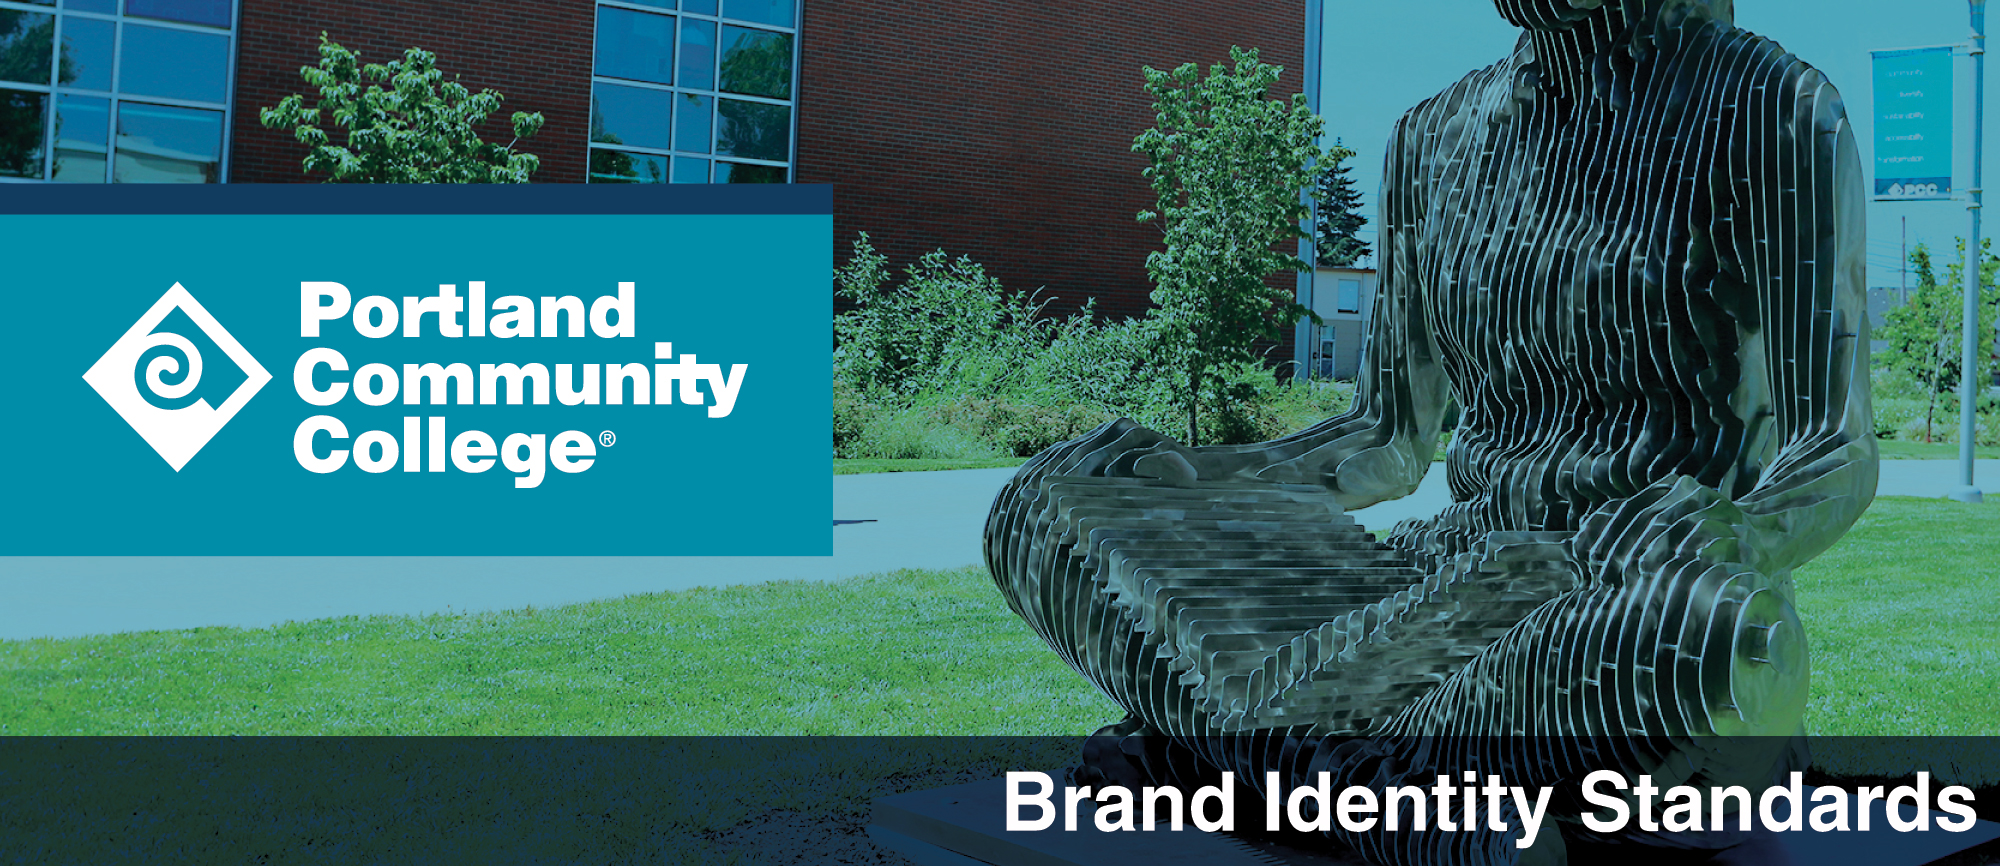 Marketing Department Work Example - Brand Identity Standards